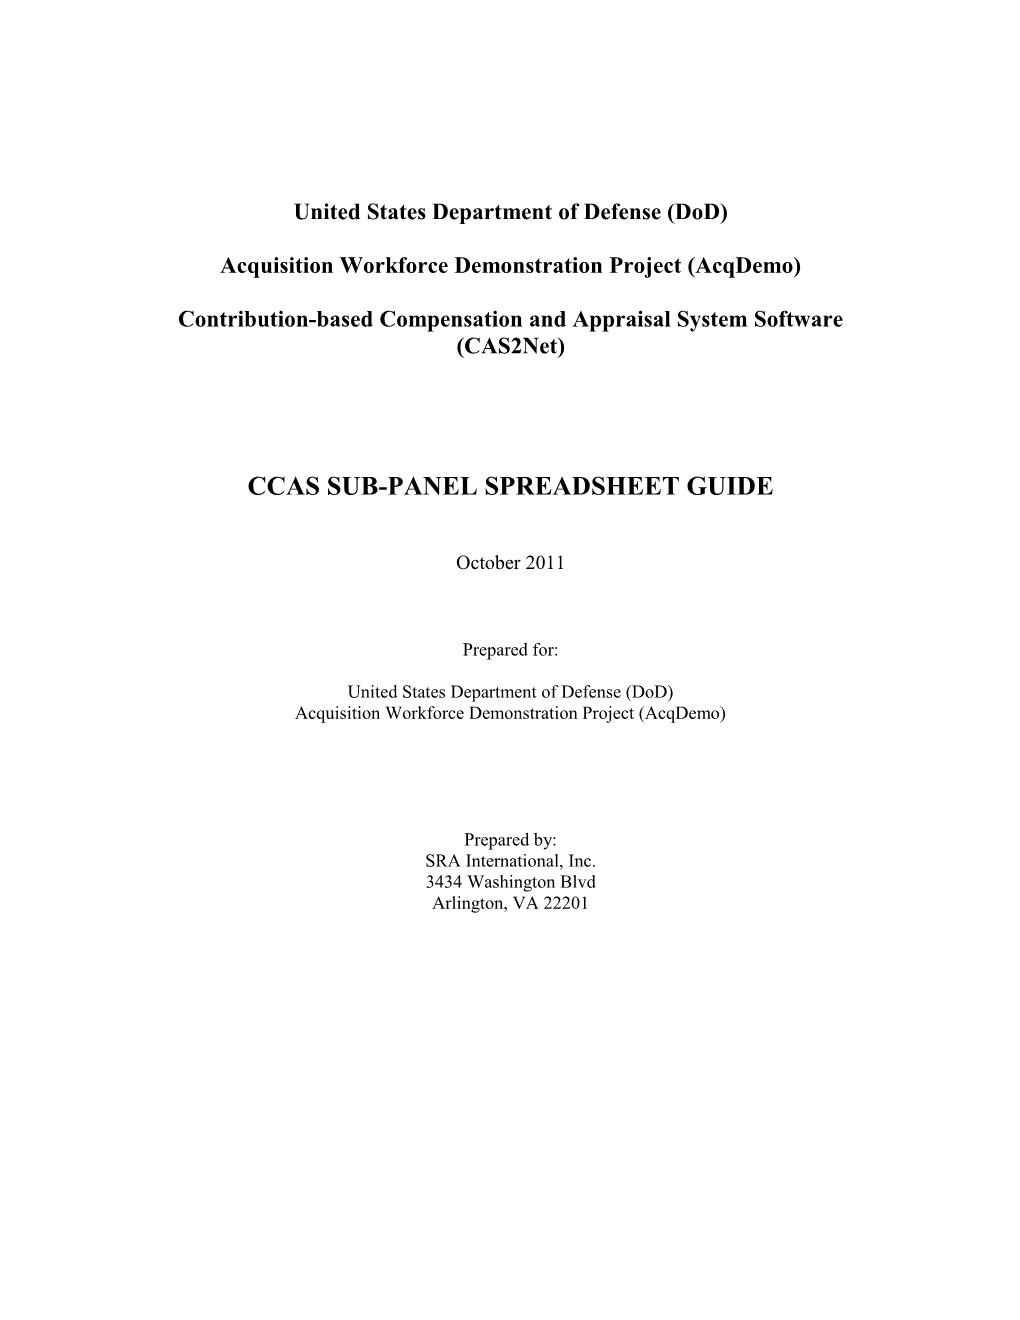 Single CCAS Spreadsheet